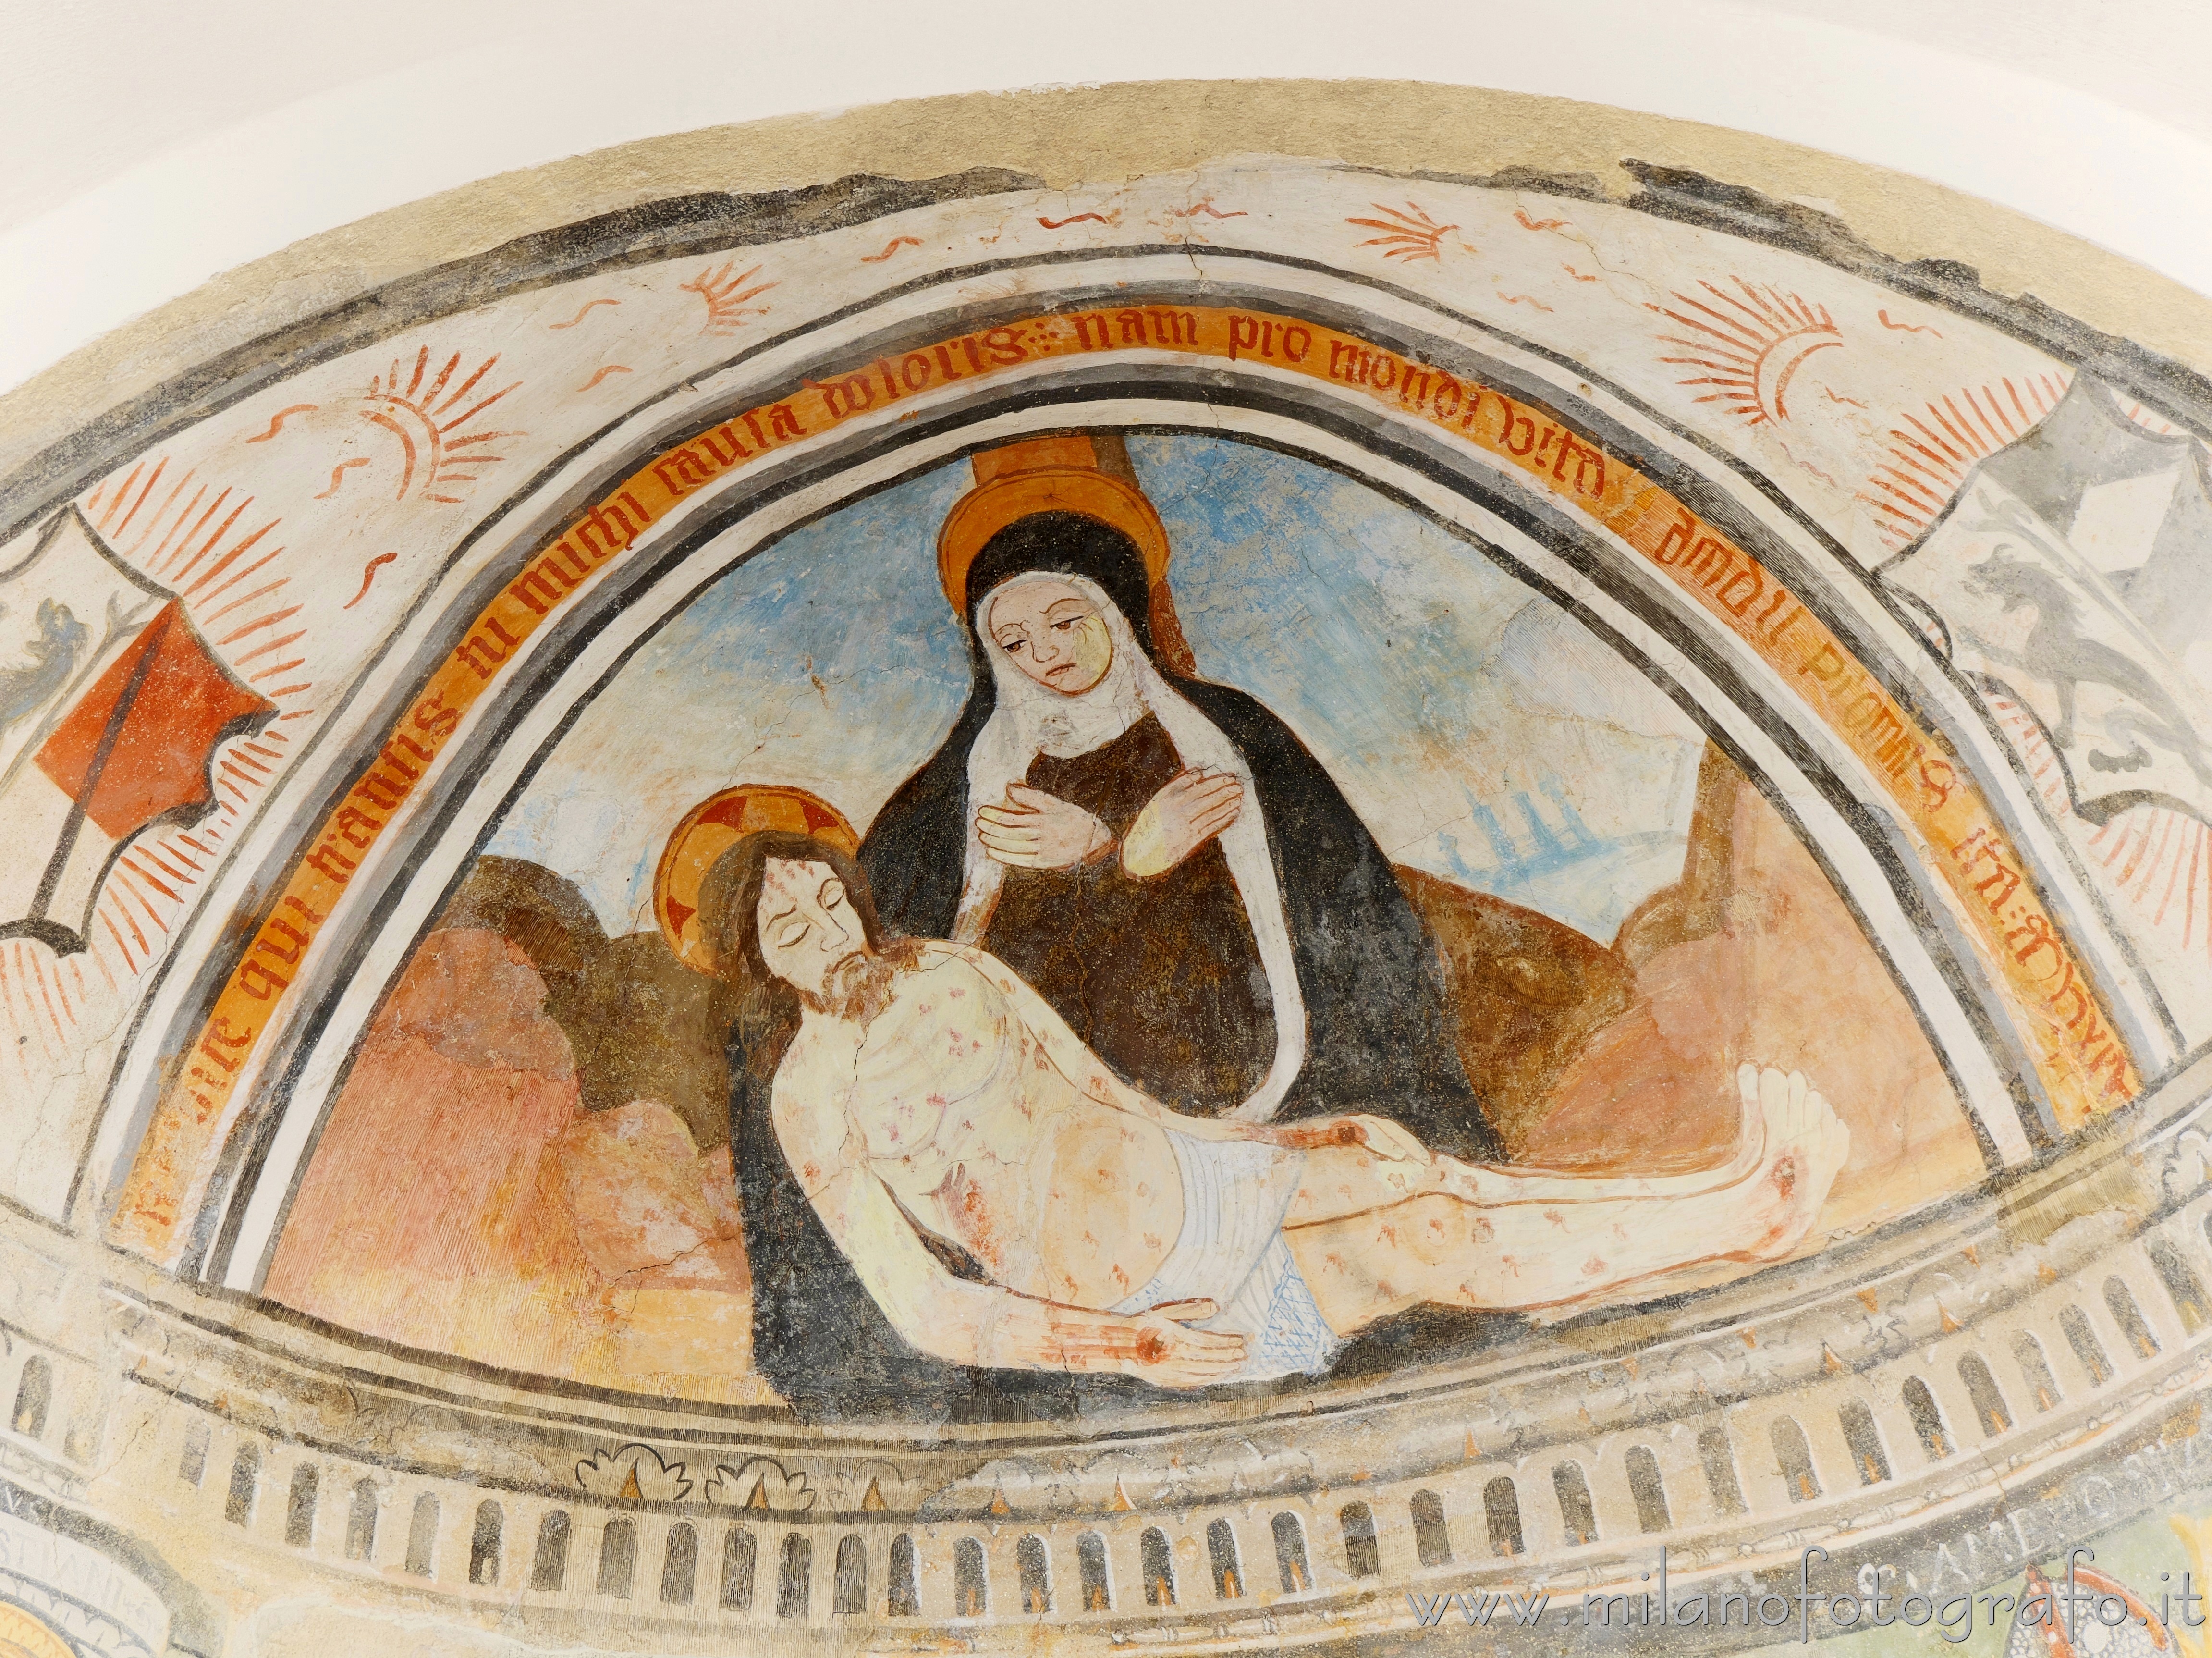 Gaglianico (Biella, Italy): Frescoed apsidal basin in the Oratory of San Rocco - Gaglianico (Biella, Italy)